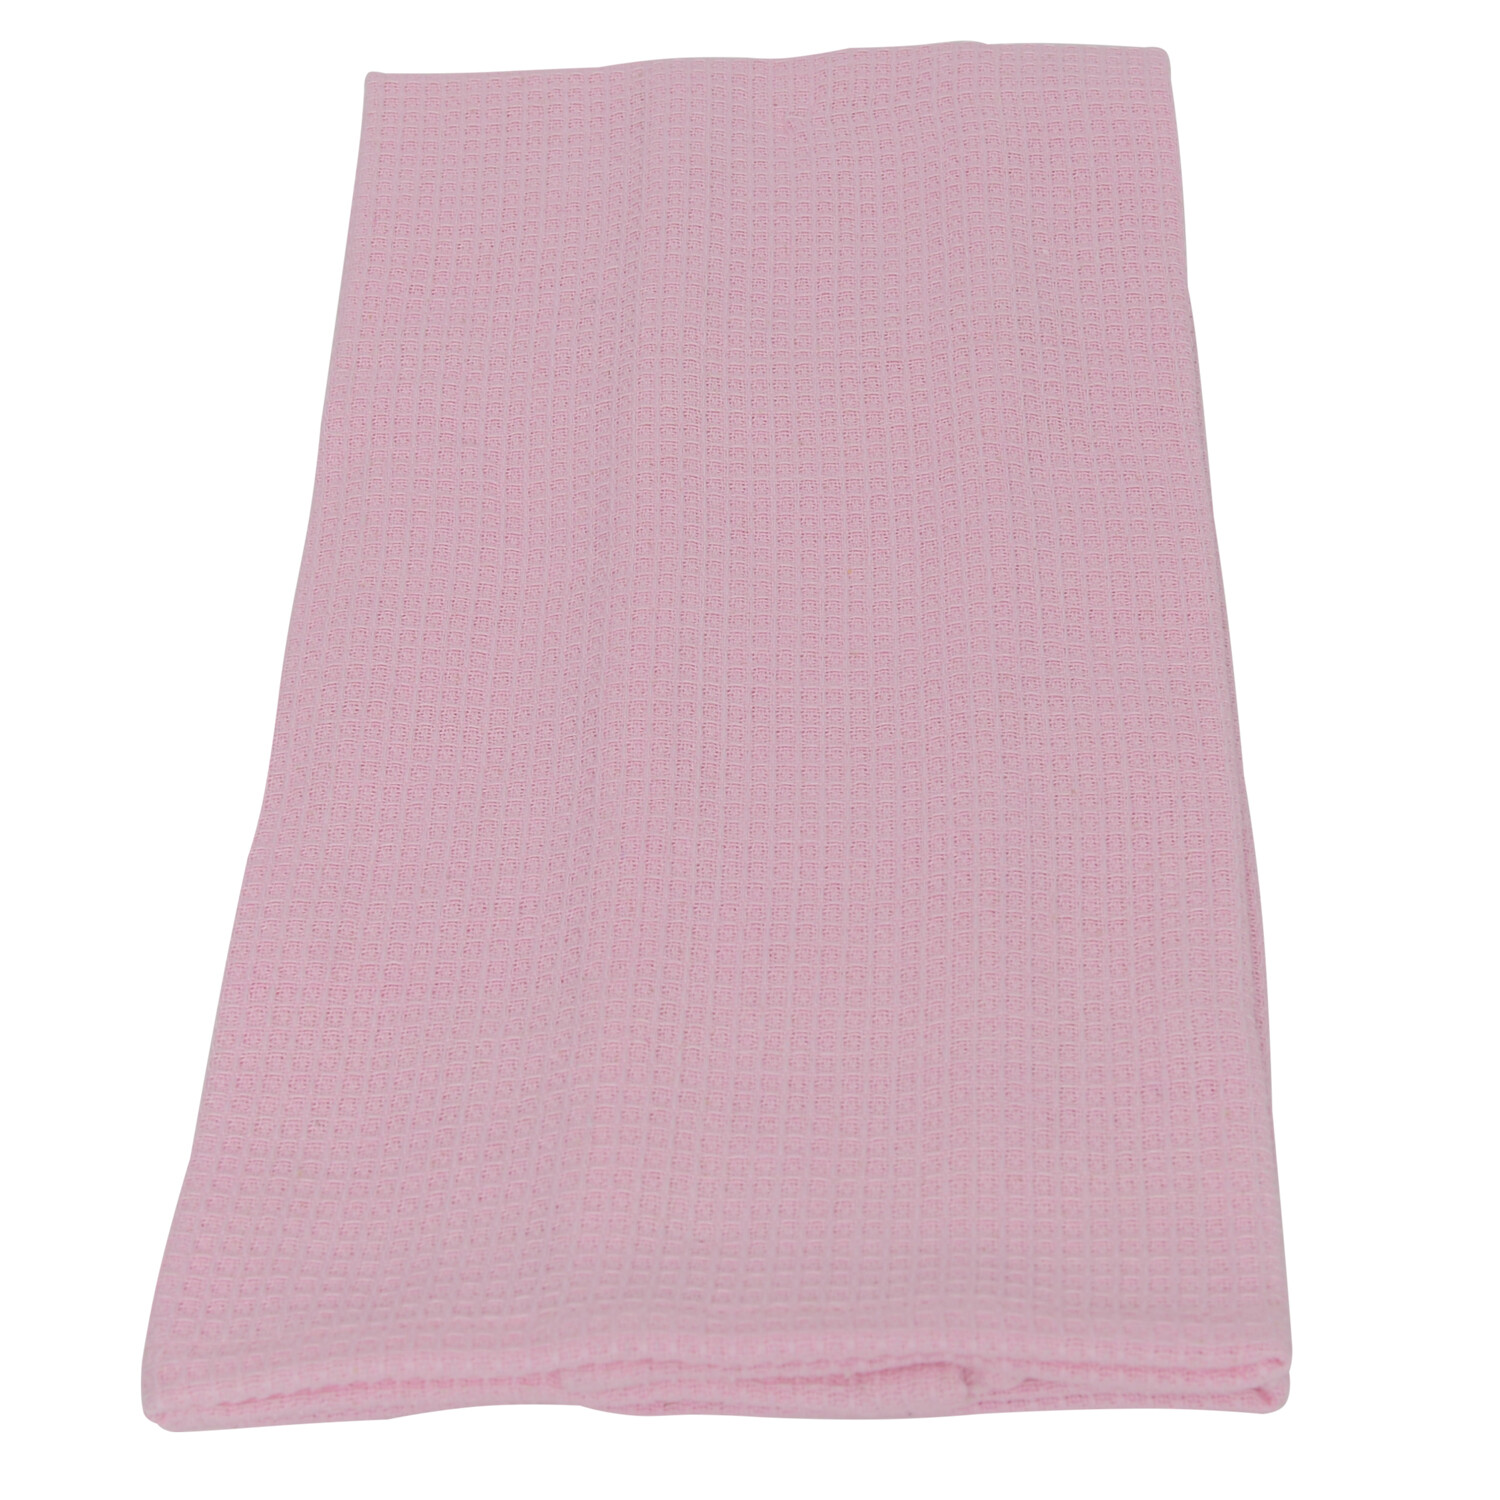 Pack of 3 Daisy Daze Tea Towels - Pink Image 3